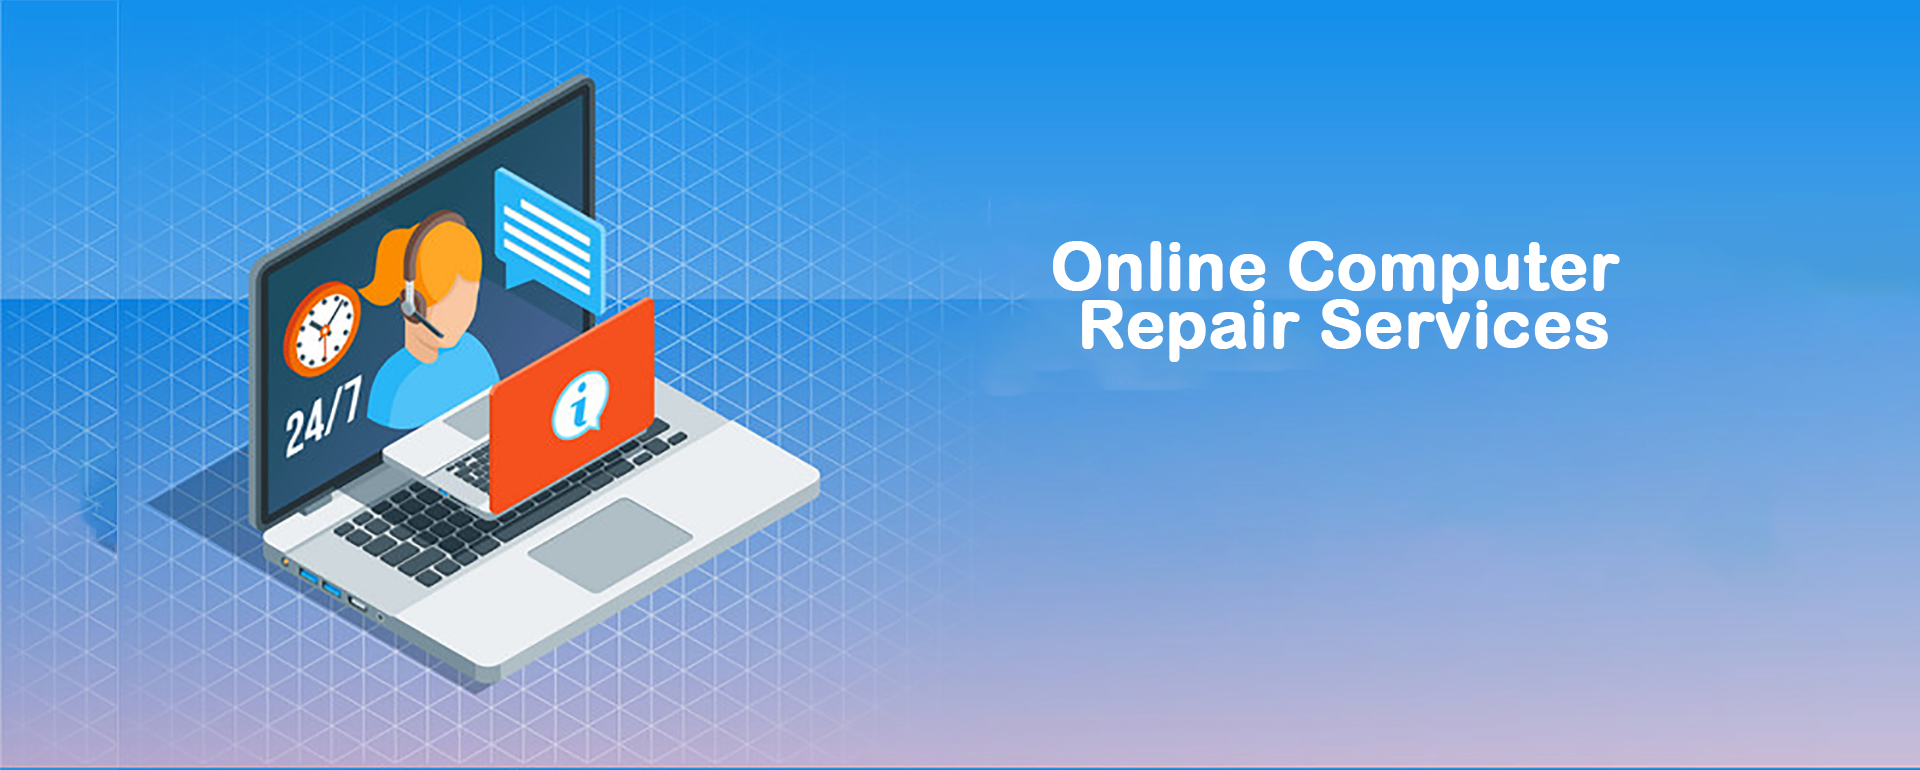 Online computer repair service